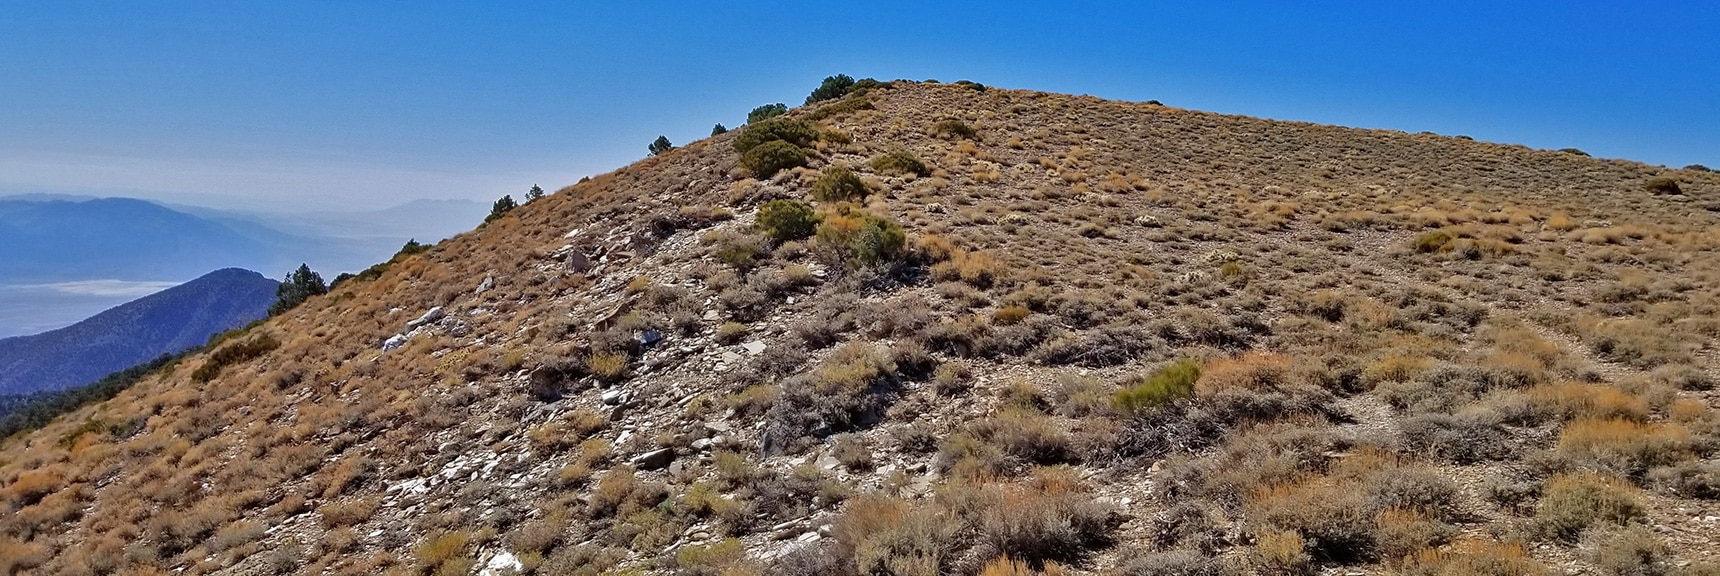 View of Mid Summit from Wildrose Peak Northern Summit Area | Wildrose Peak | Panamint Mountain Range | Death Valley National Park, California